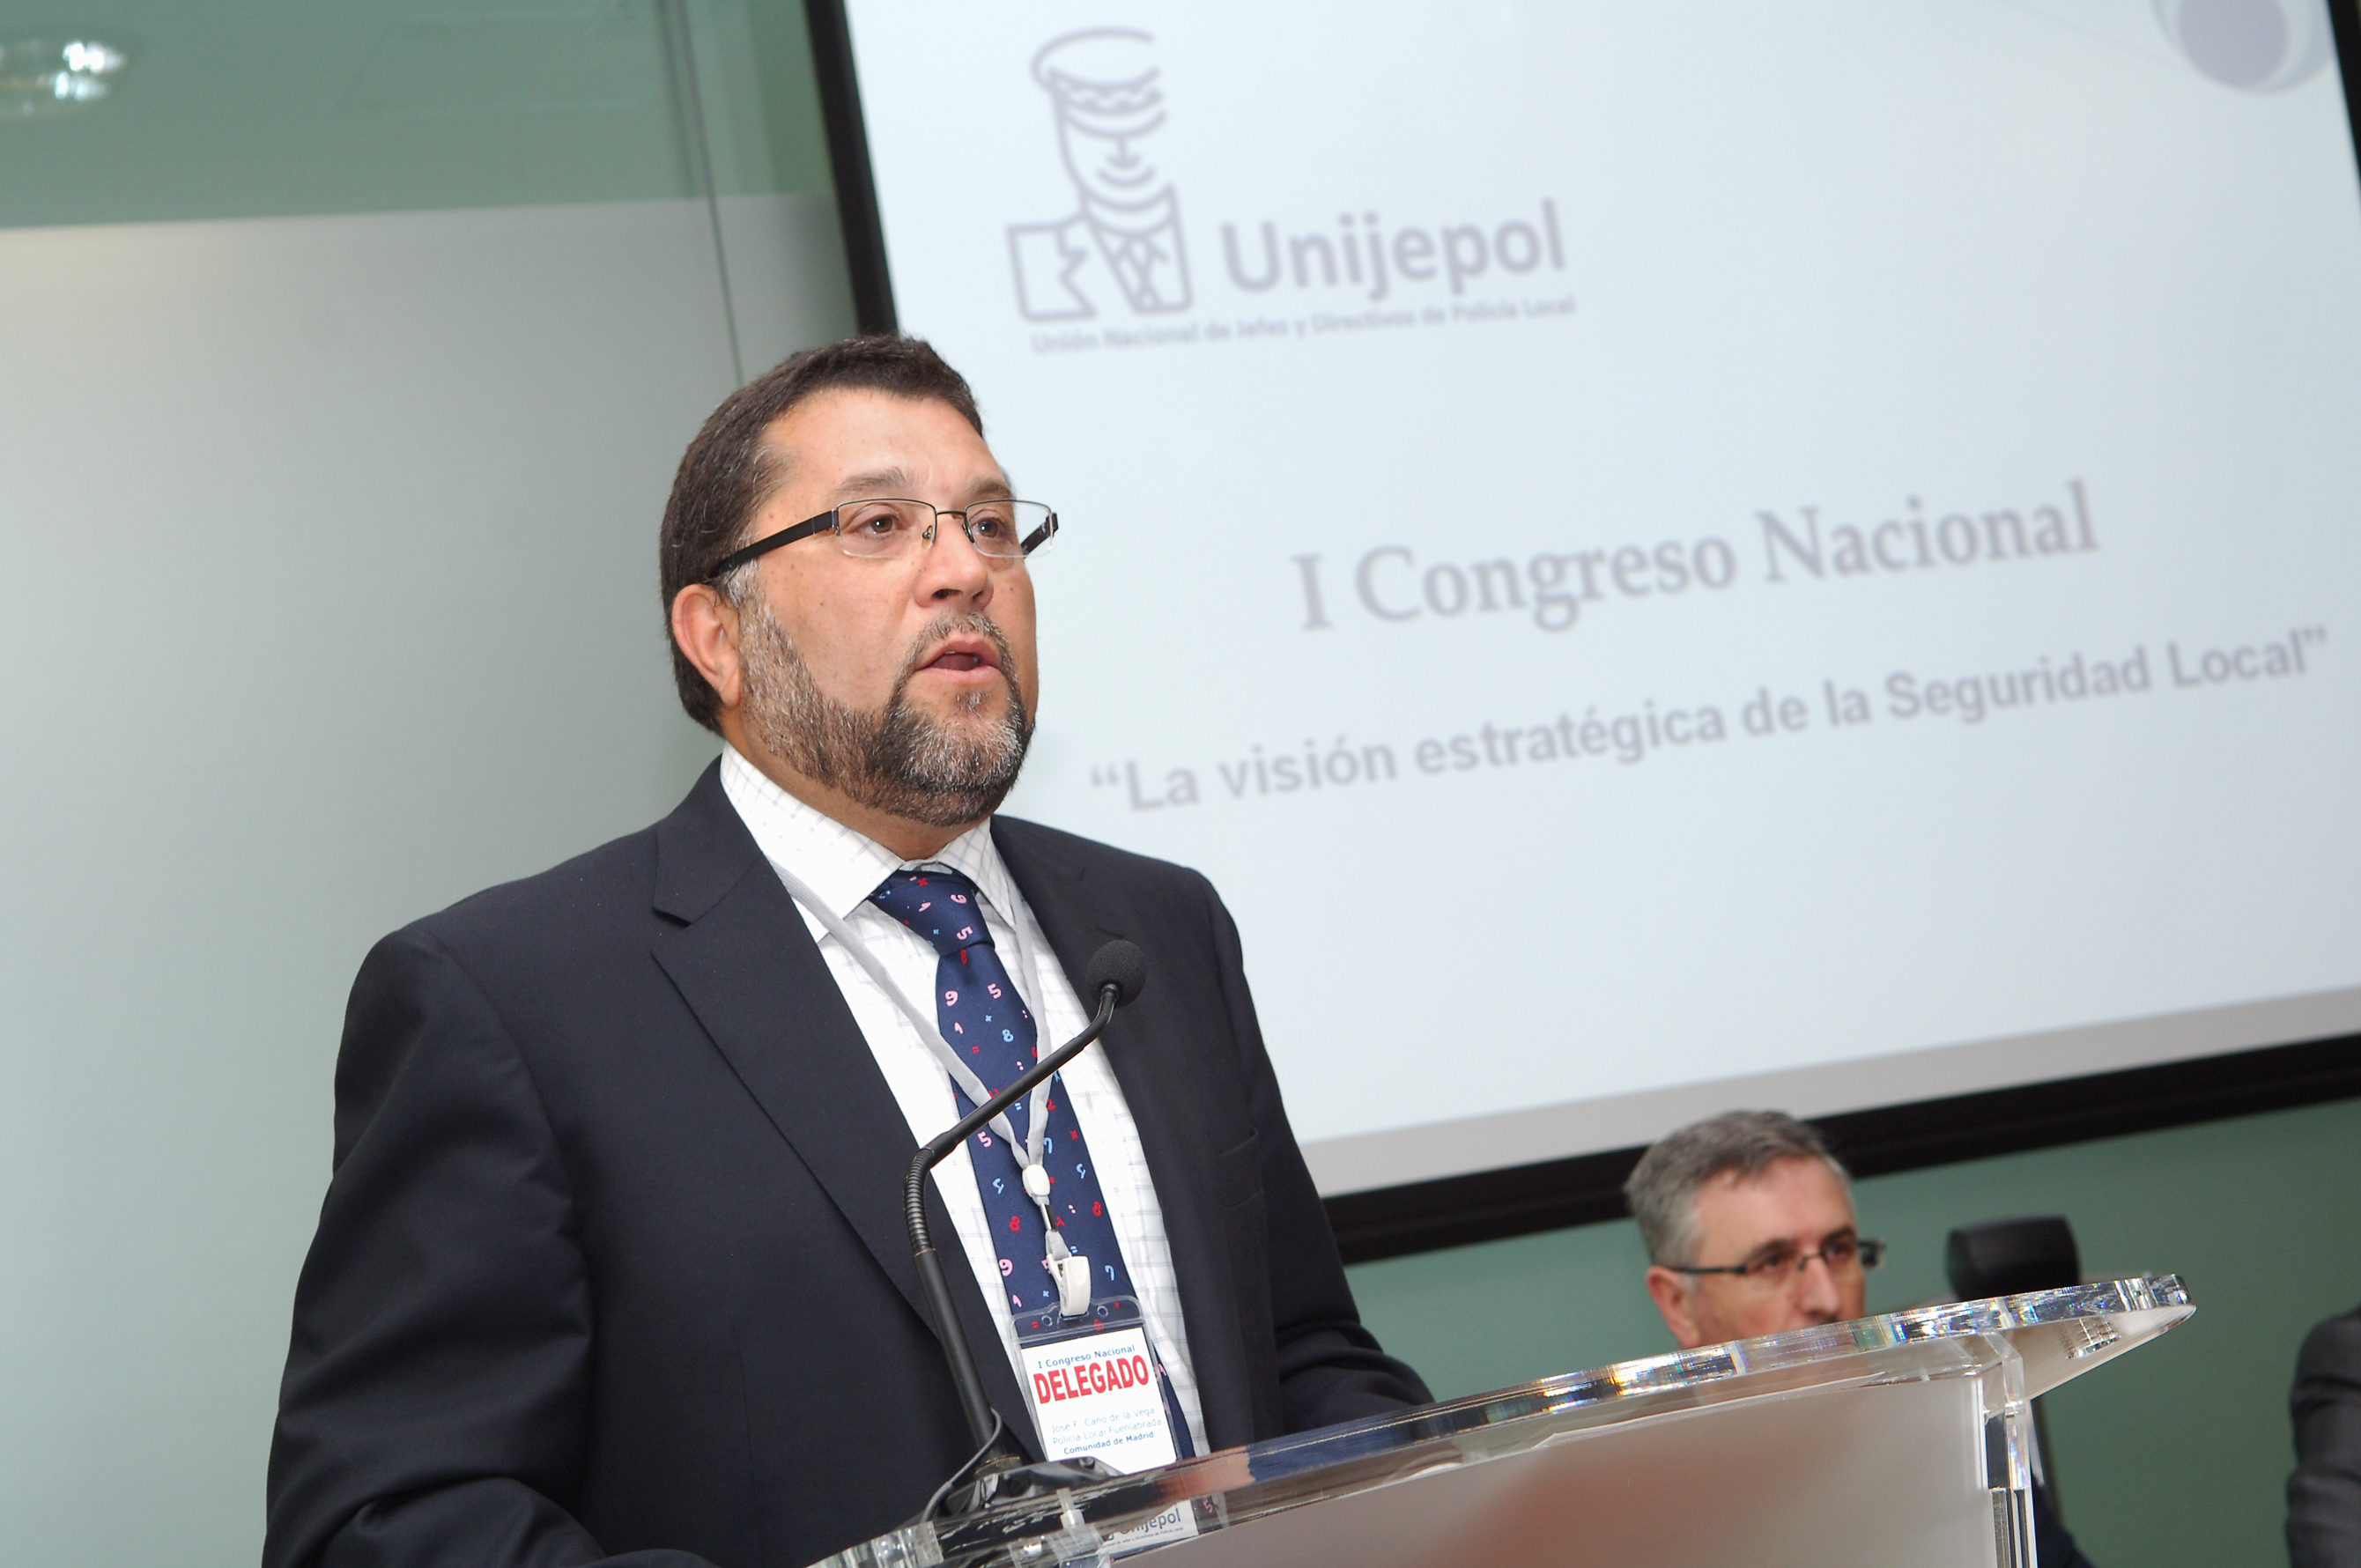 José Francisco Cano de la Vega, Presidente de Unijepol